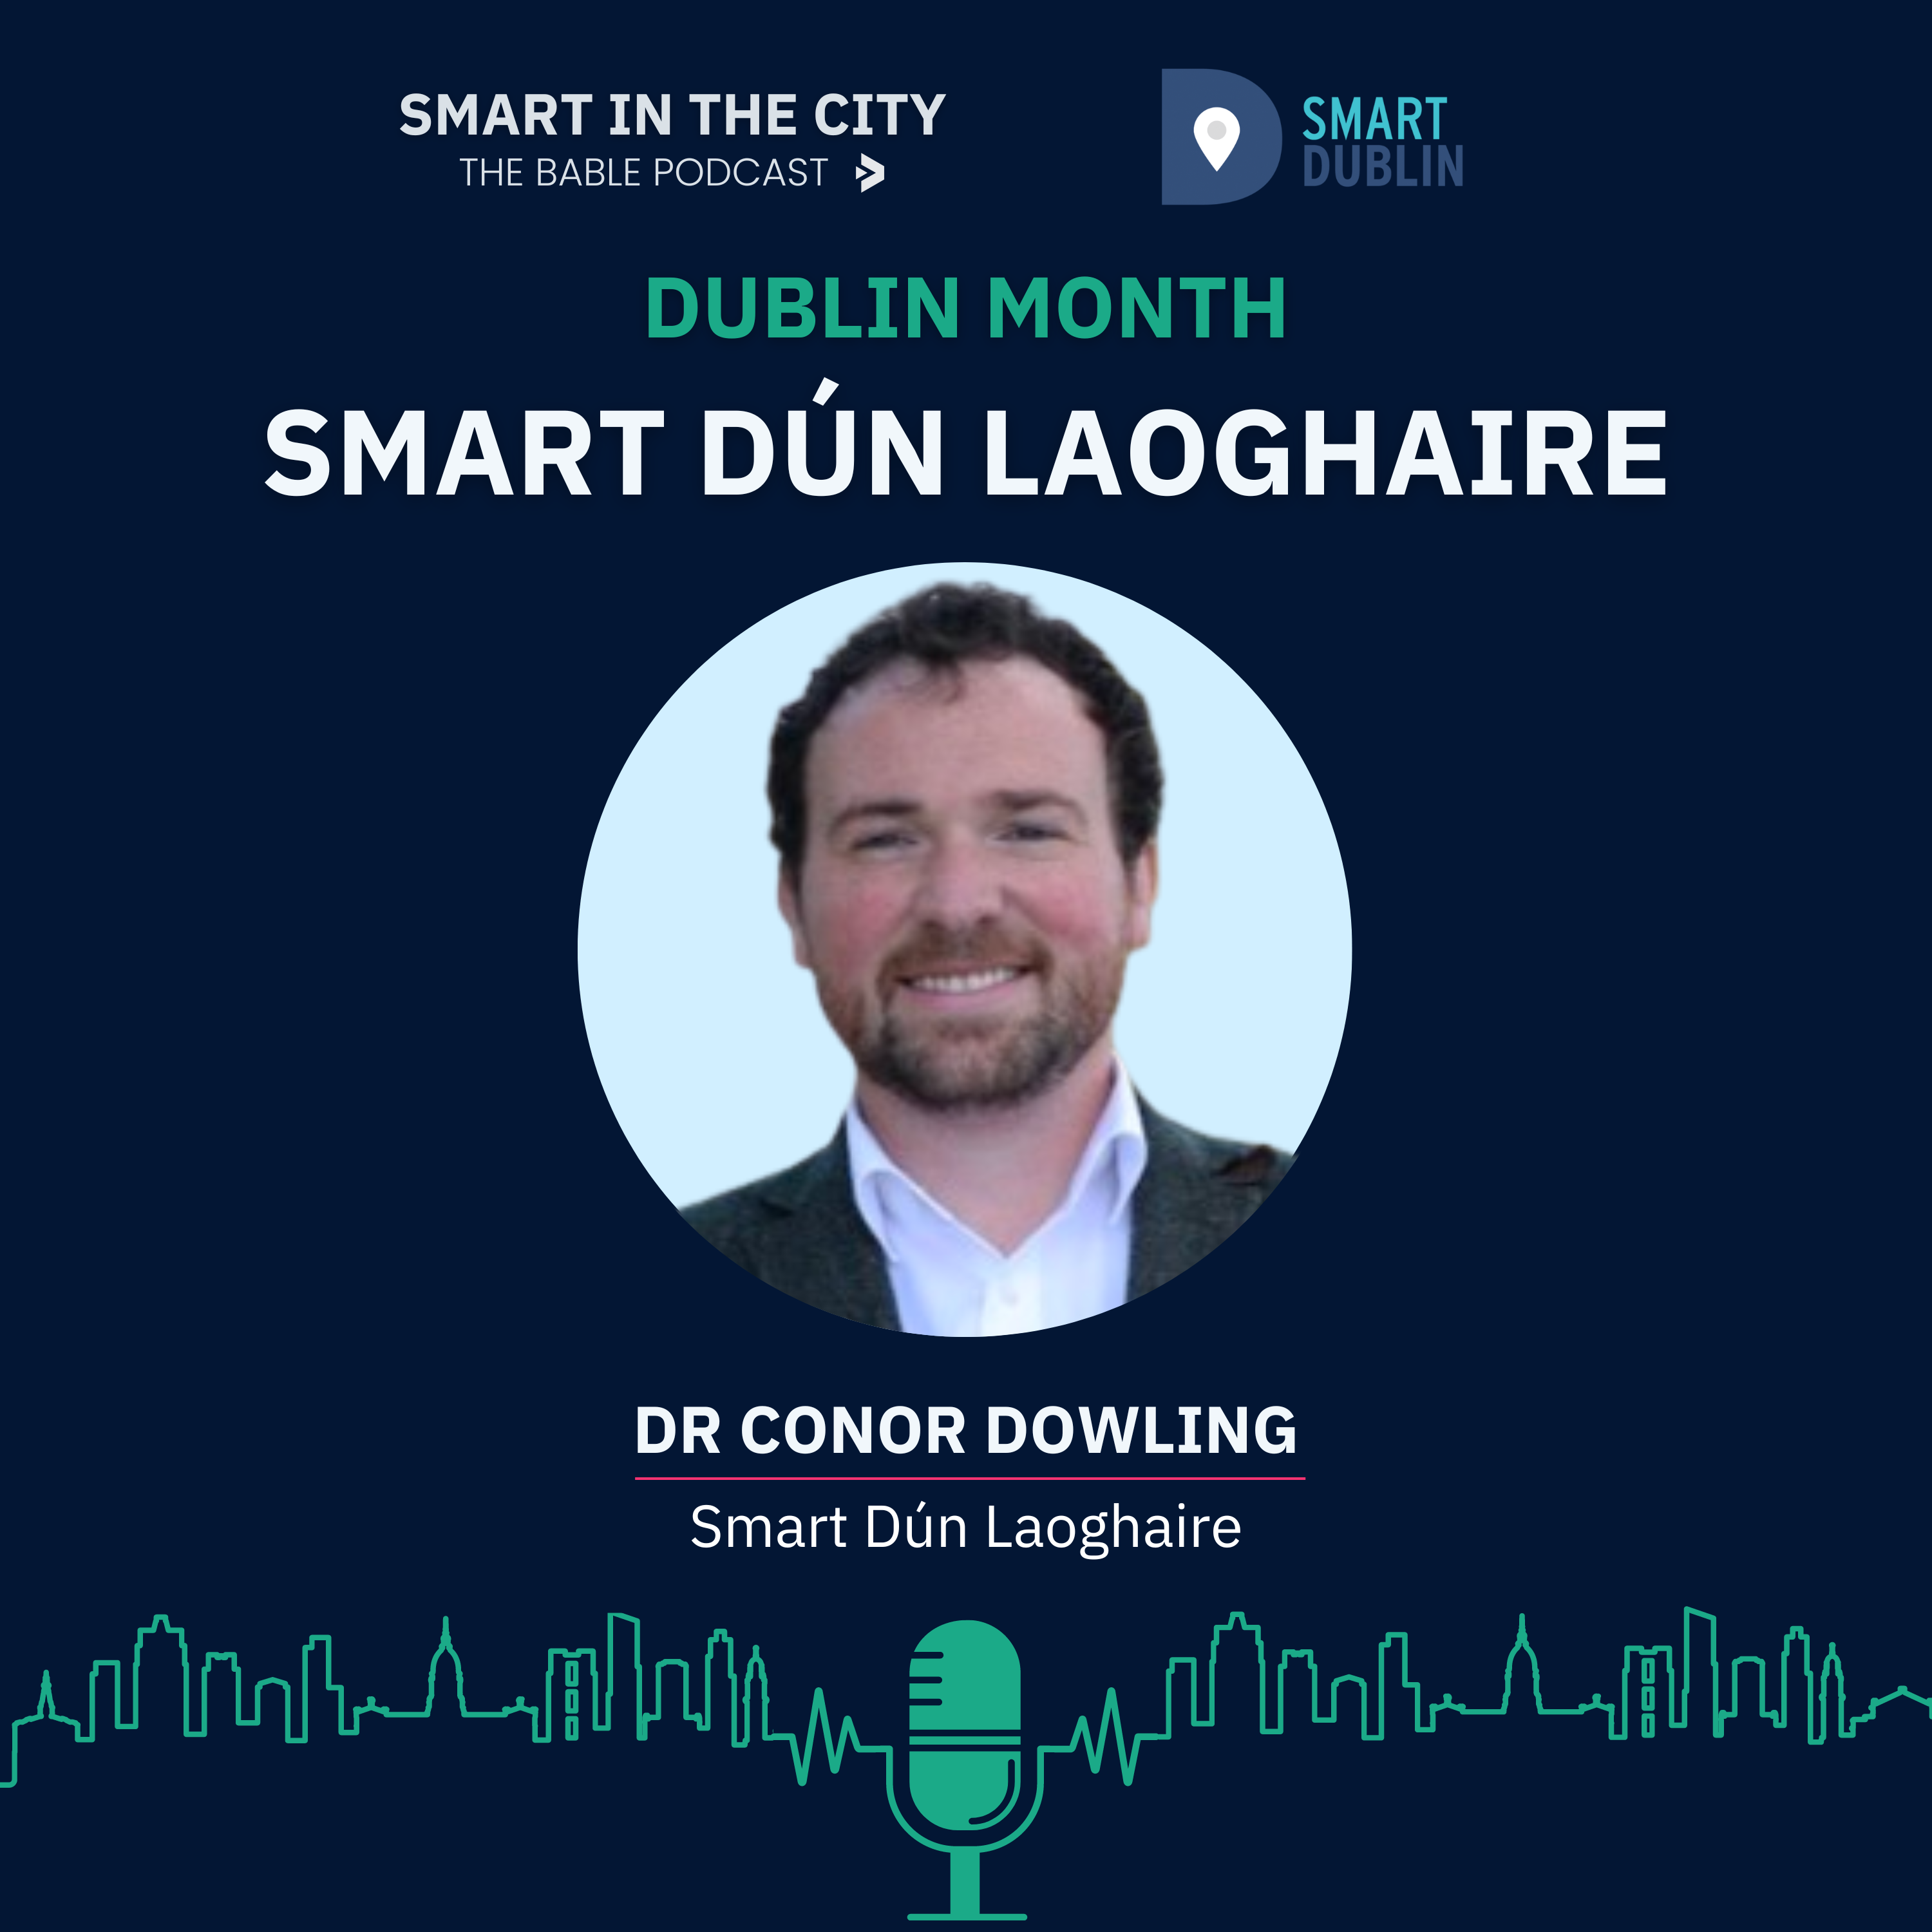 Dublin Month #3 - Smart Dún Laoghaire: "Technology for inclusion"